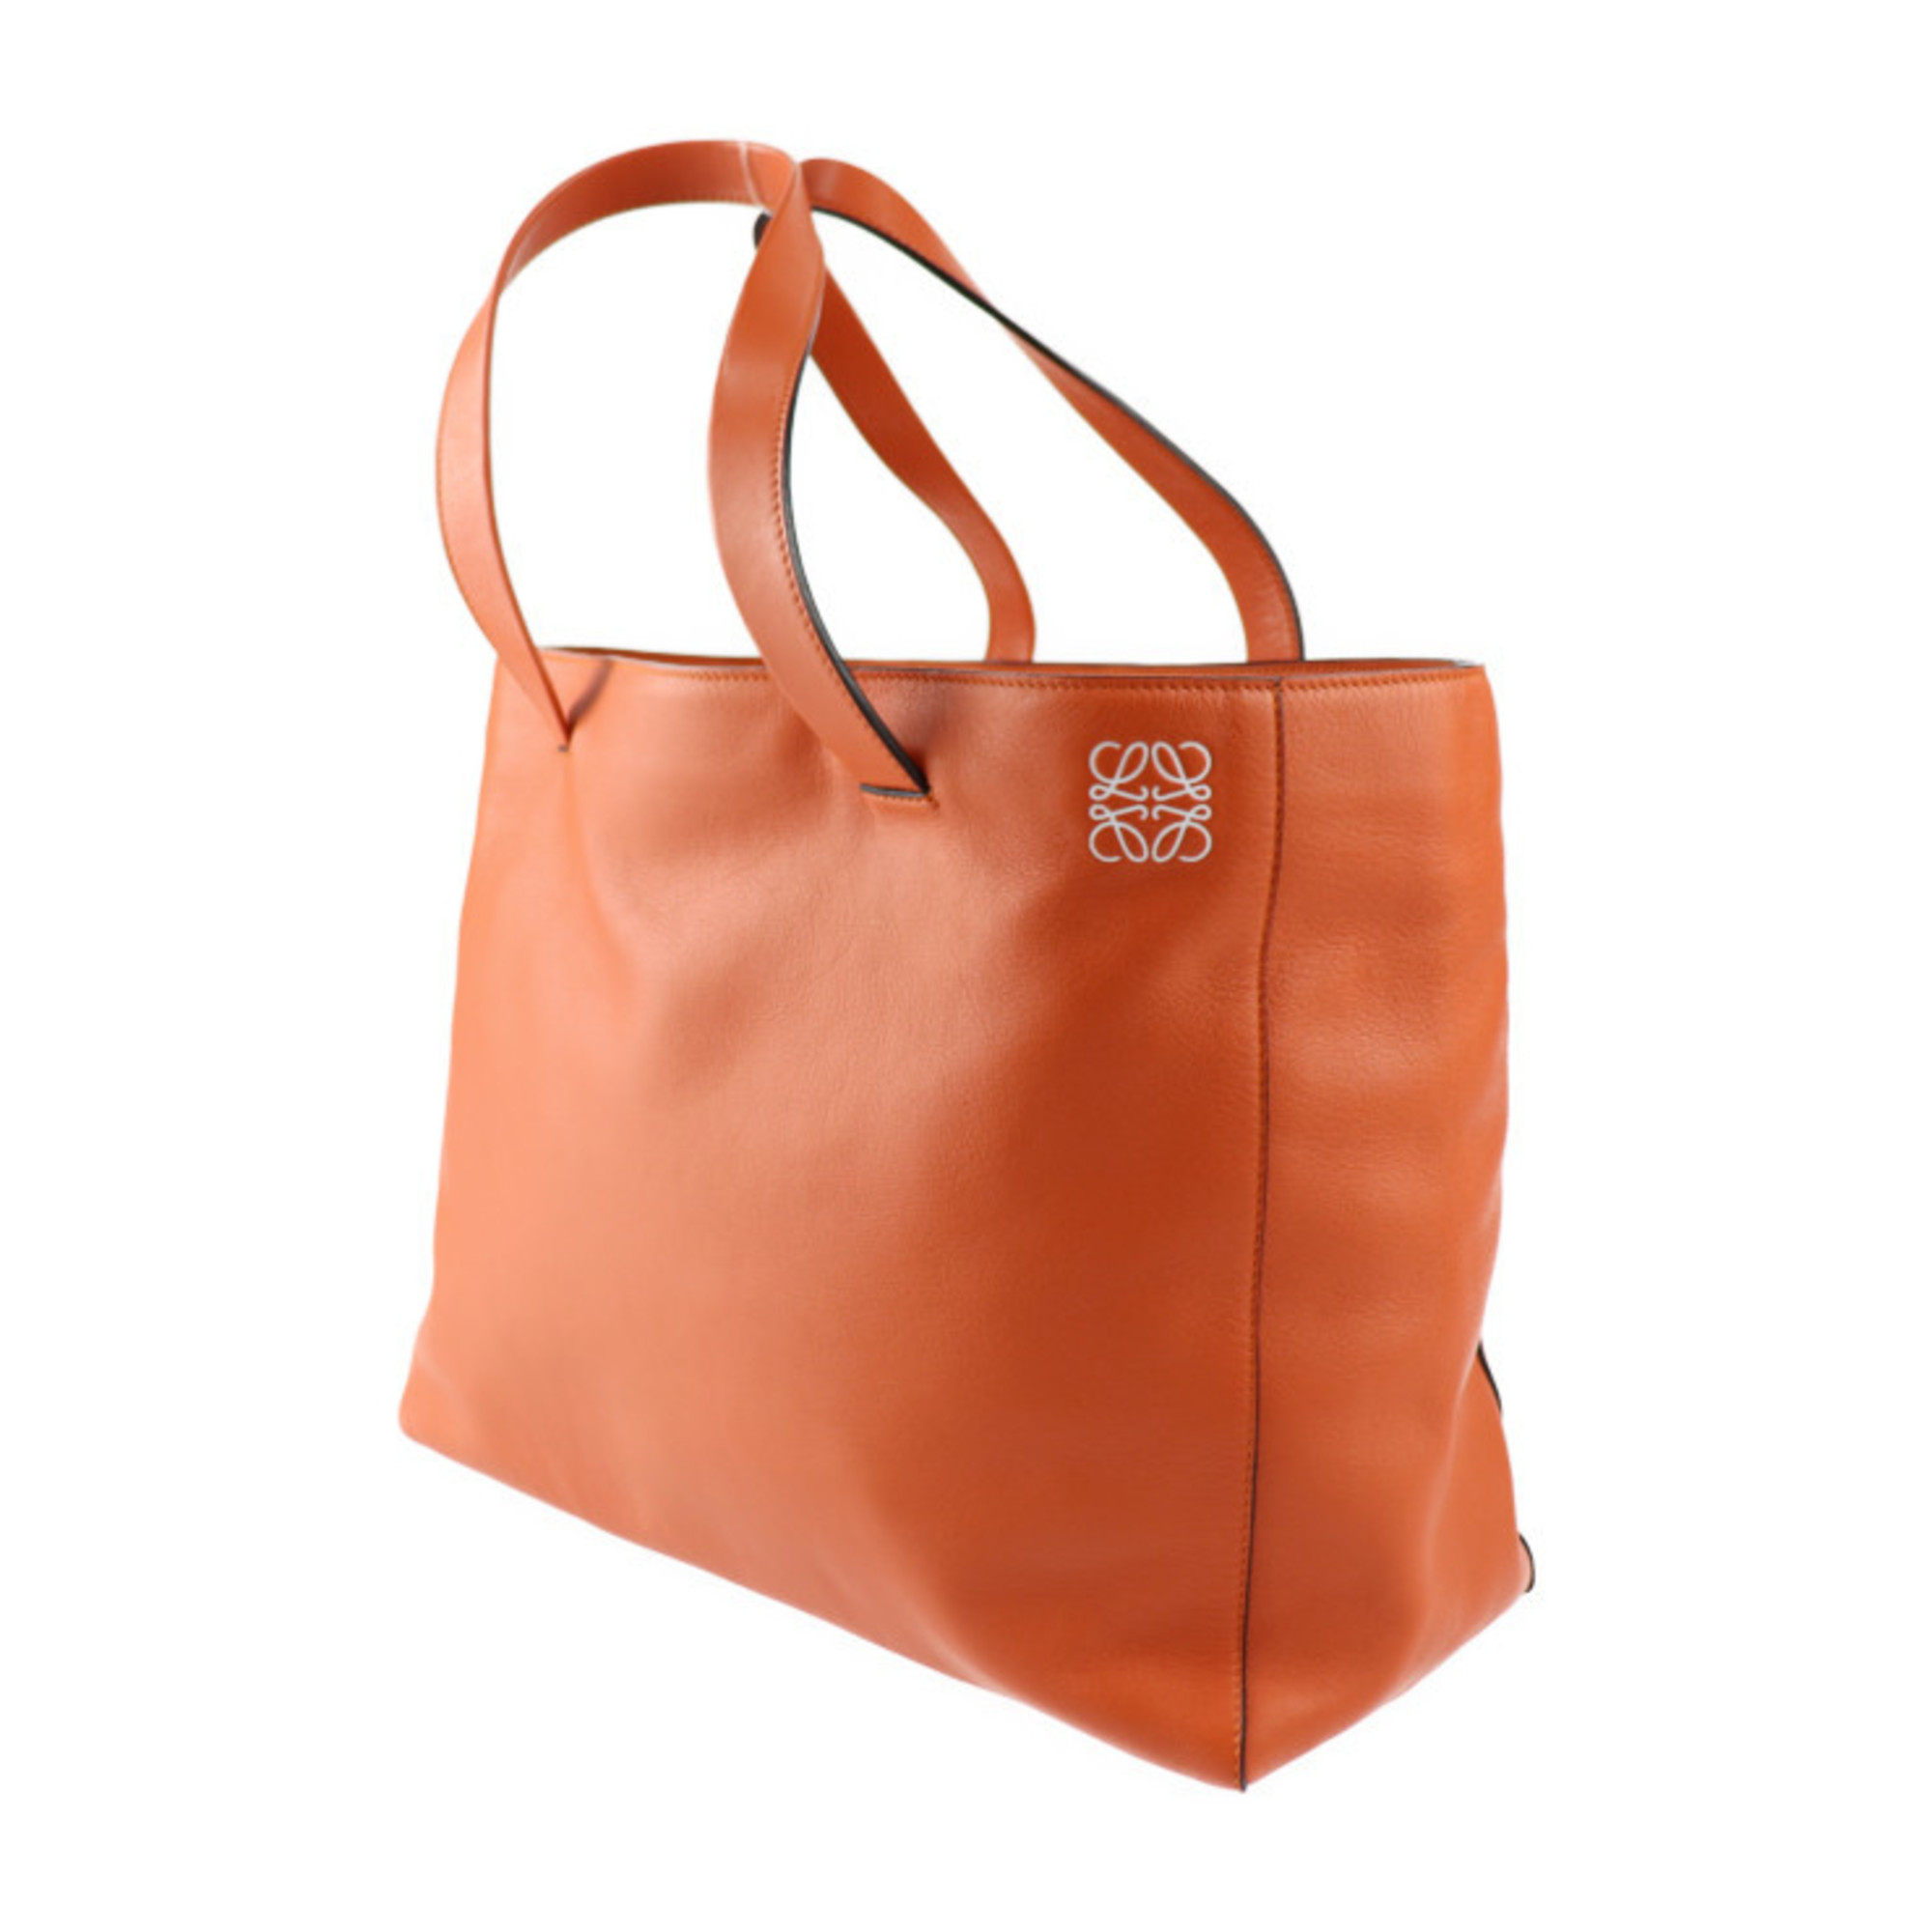 LOEWE East West Shopper Tote Bag 308 20 K84 Calf Leather Orange Silver Hardware Handbag Anagram